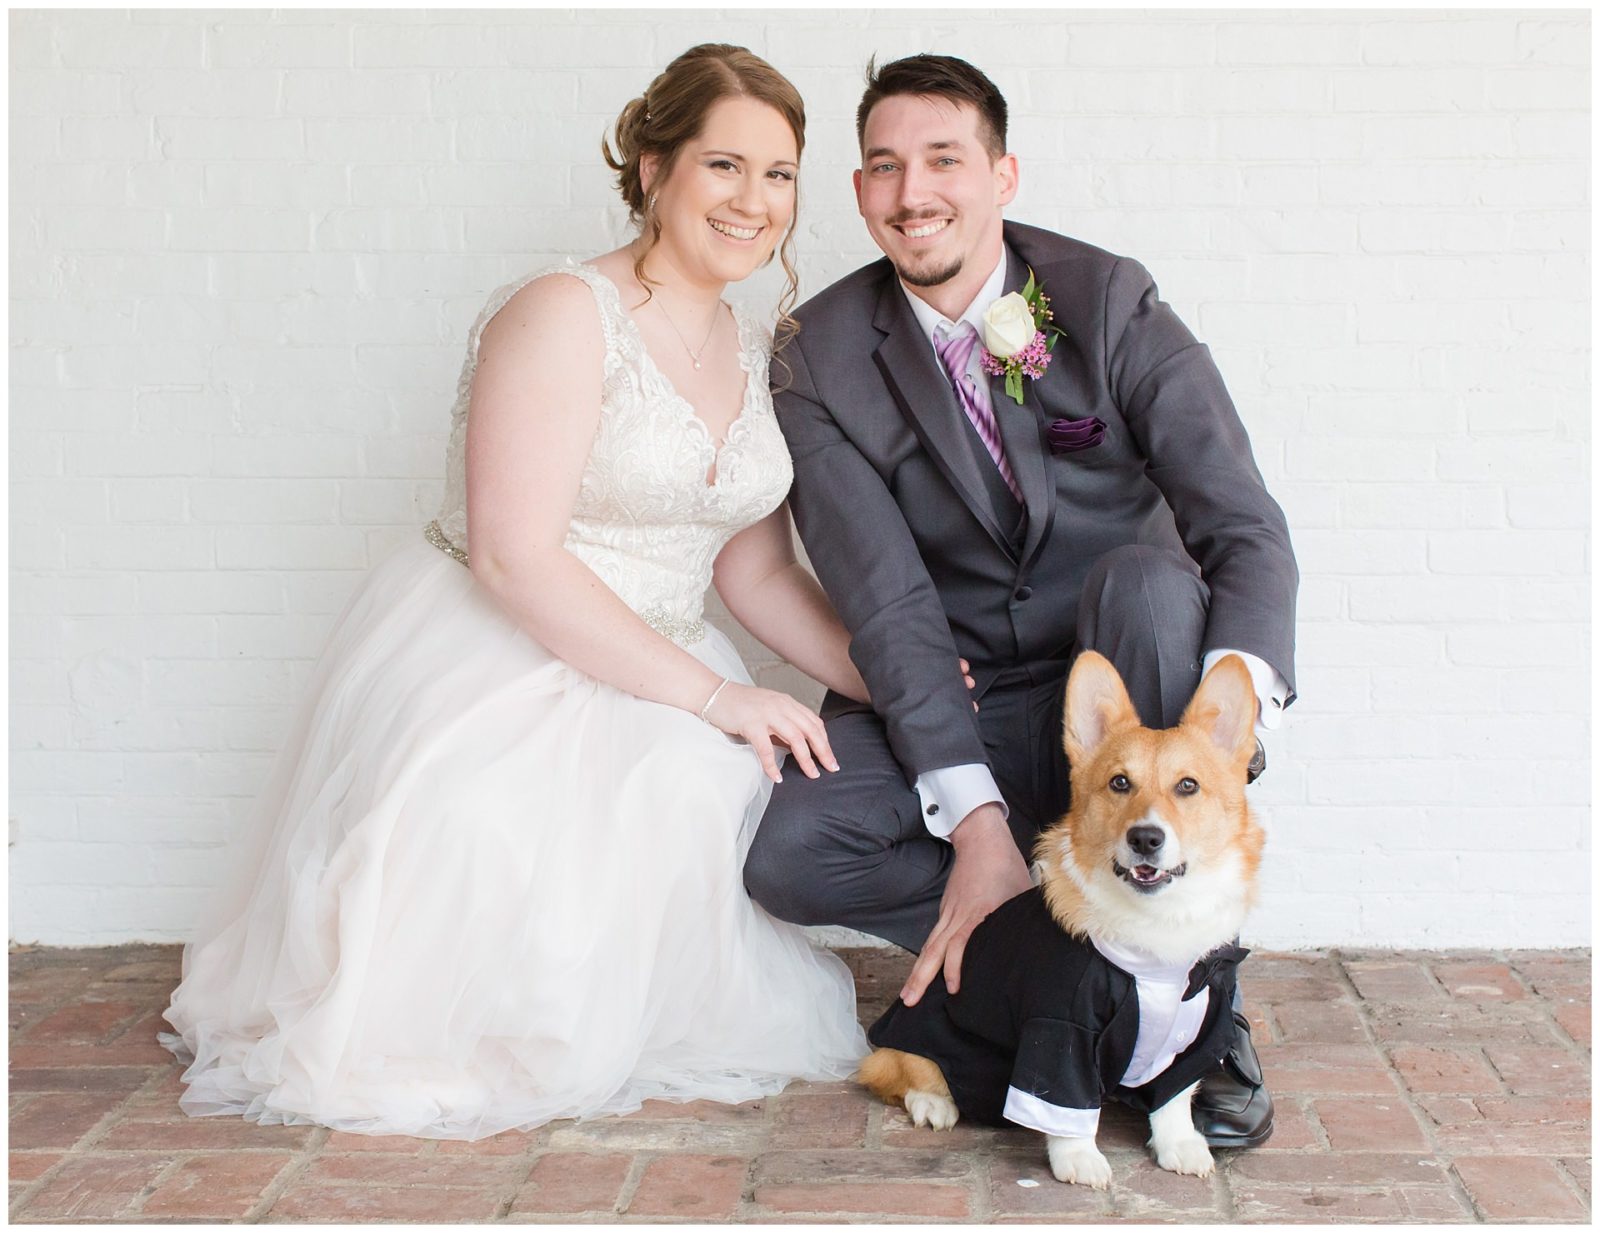 Bride and Groom and Corgi Dog Wedding Photos at Ashford Acres Inn in Cynthiana, Kentucky.